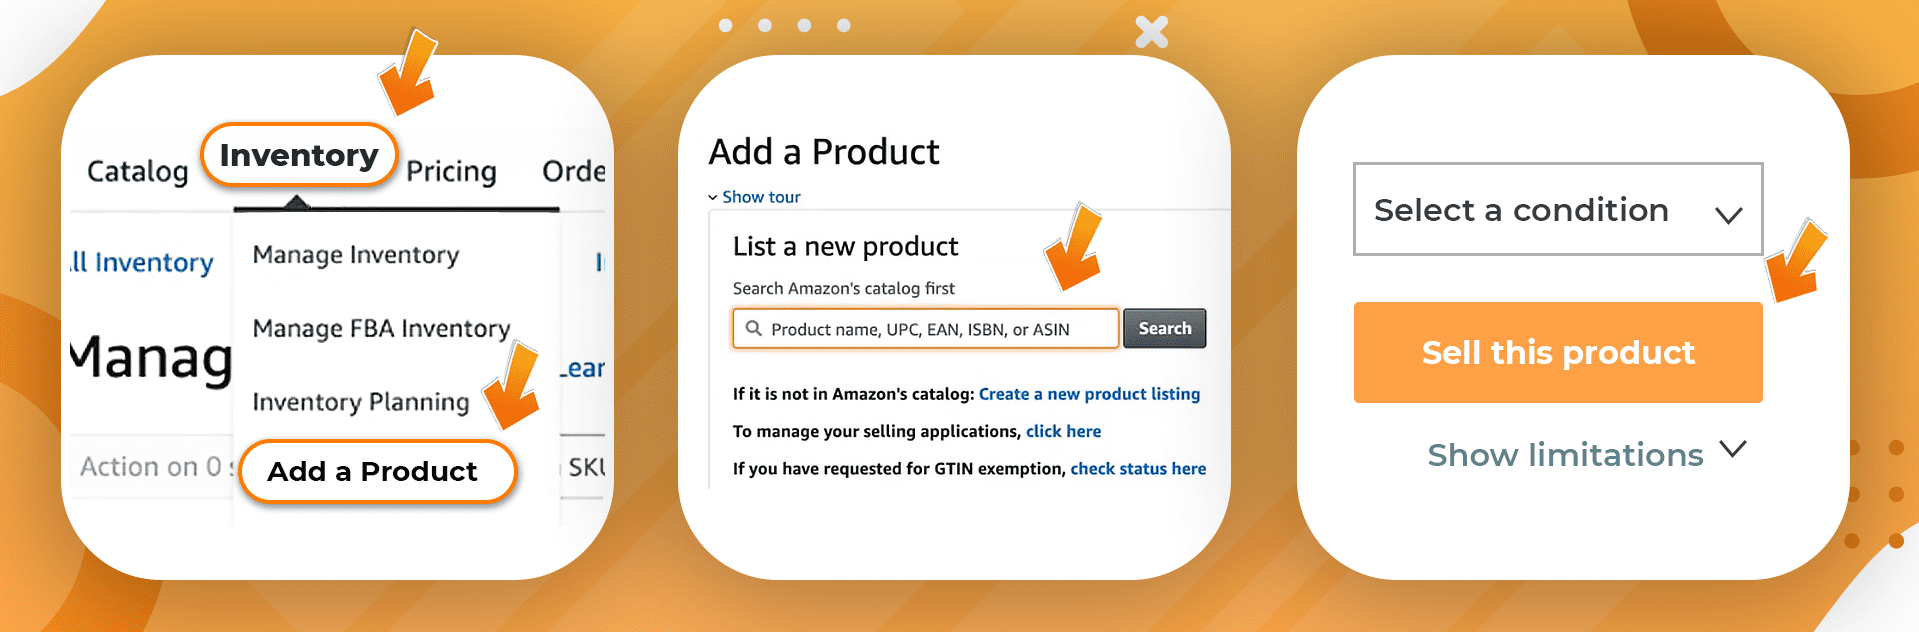 Amazon ASIN Add product